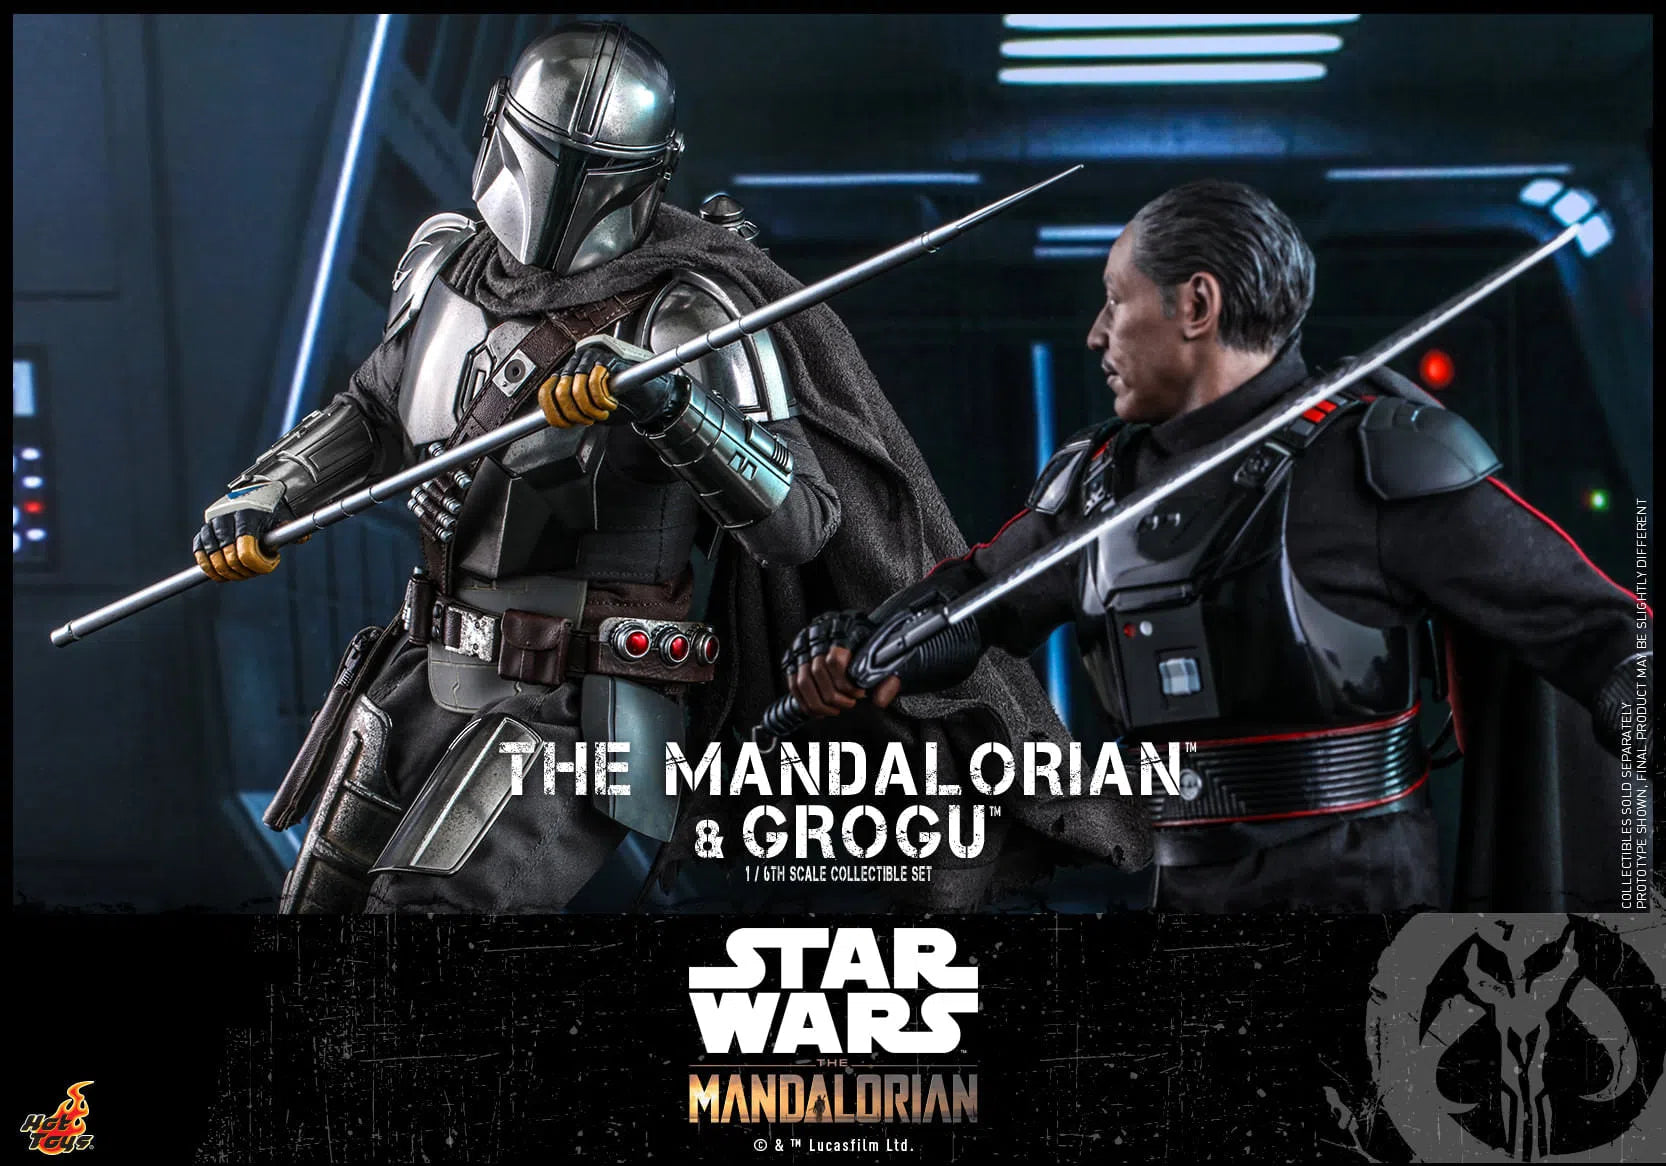 Mandalorian & Grogu Set: Standard: Star Wars: The Mandalorian: TMS051